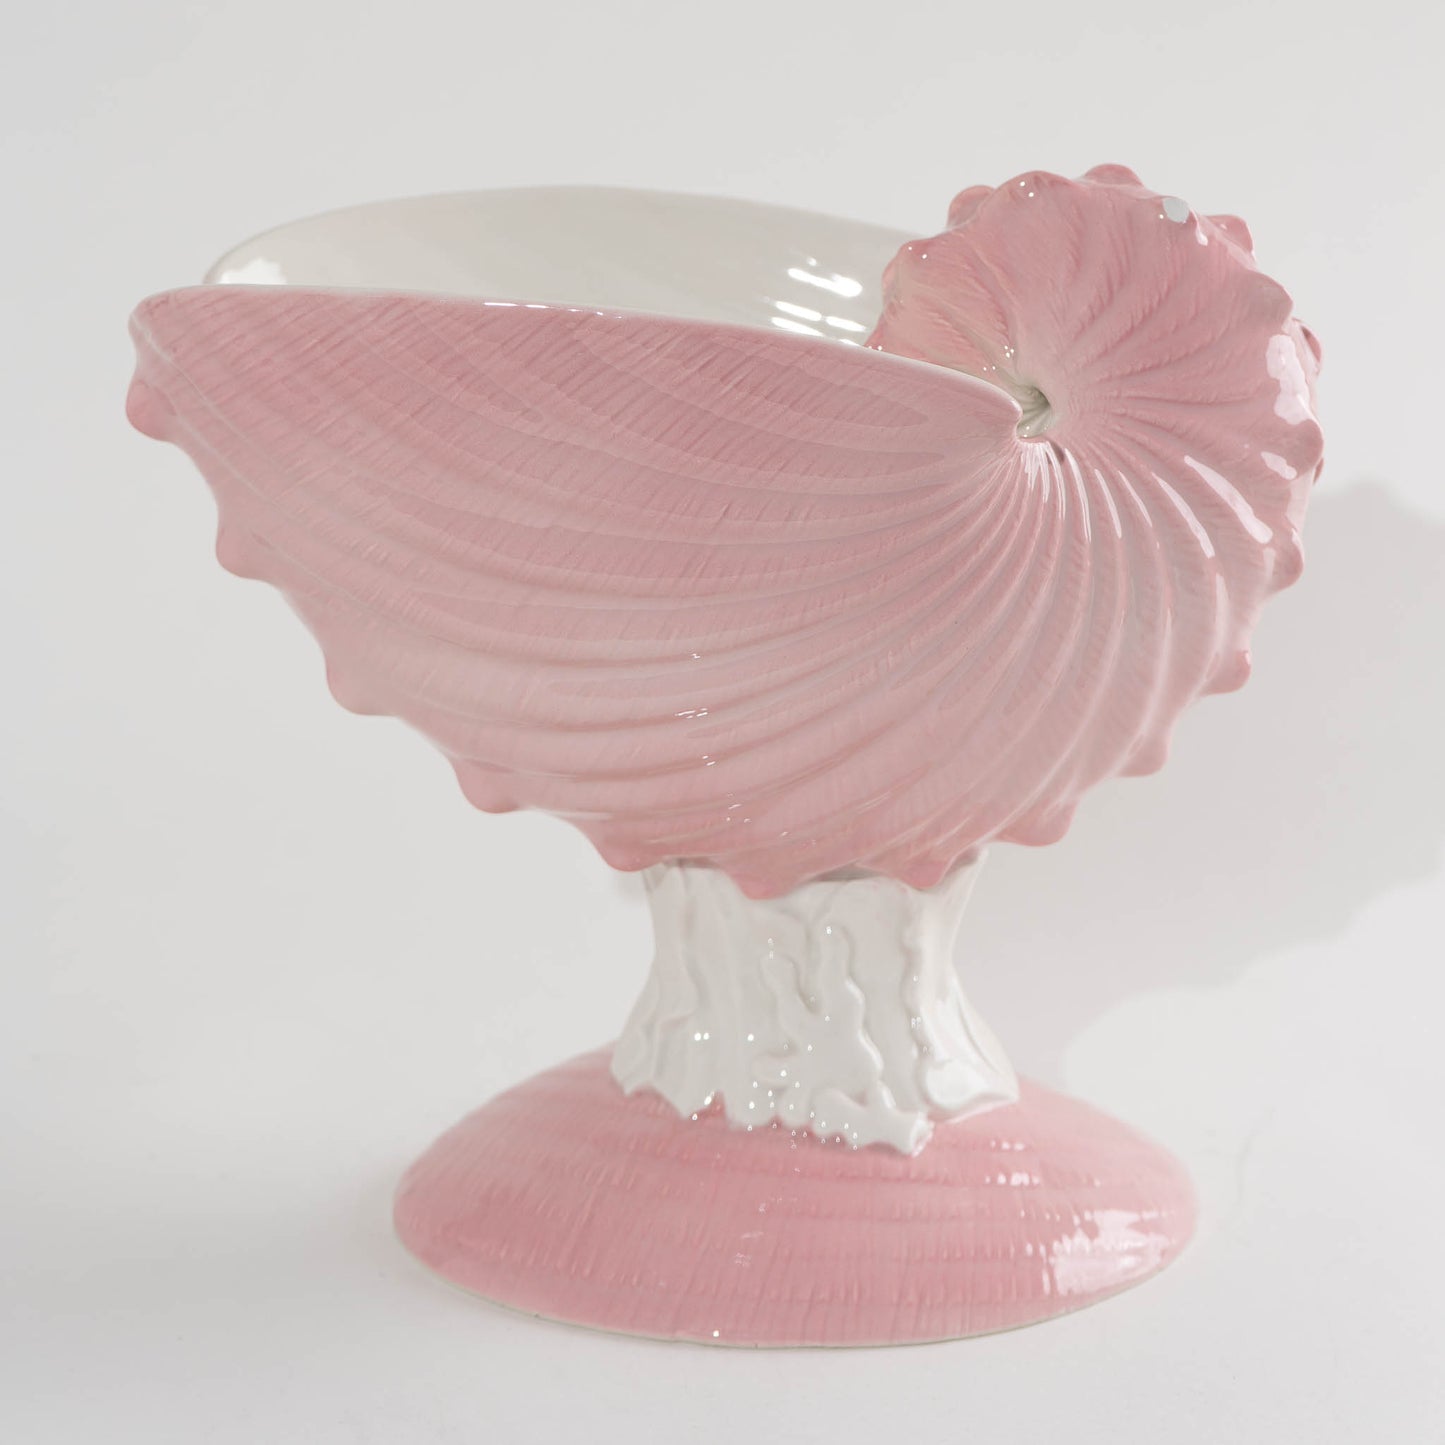 Vintage Italian Majolica Ceramic Sea Shell Vase - pink and white